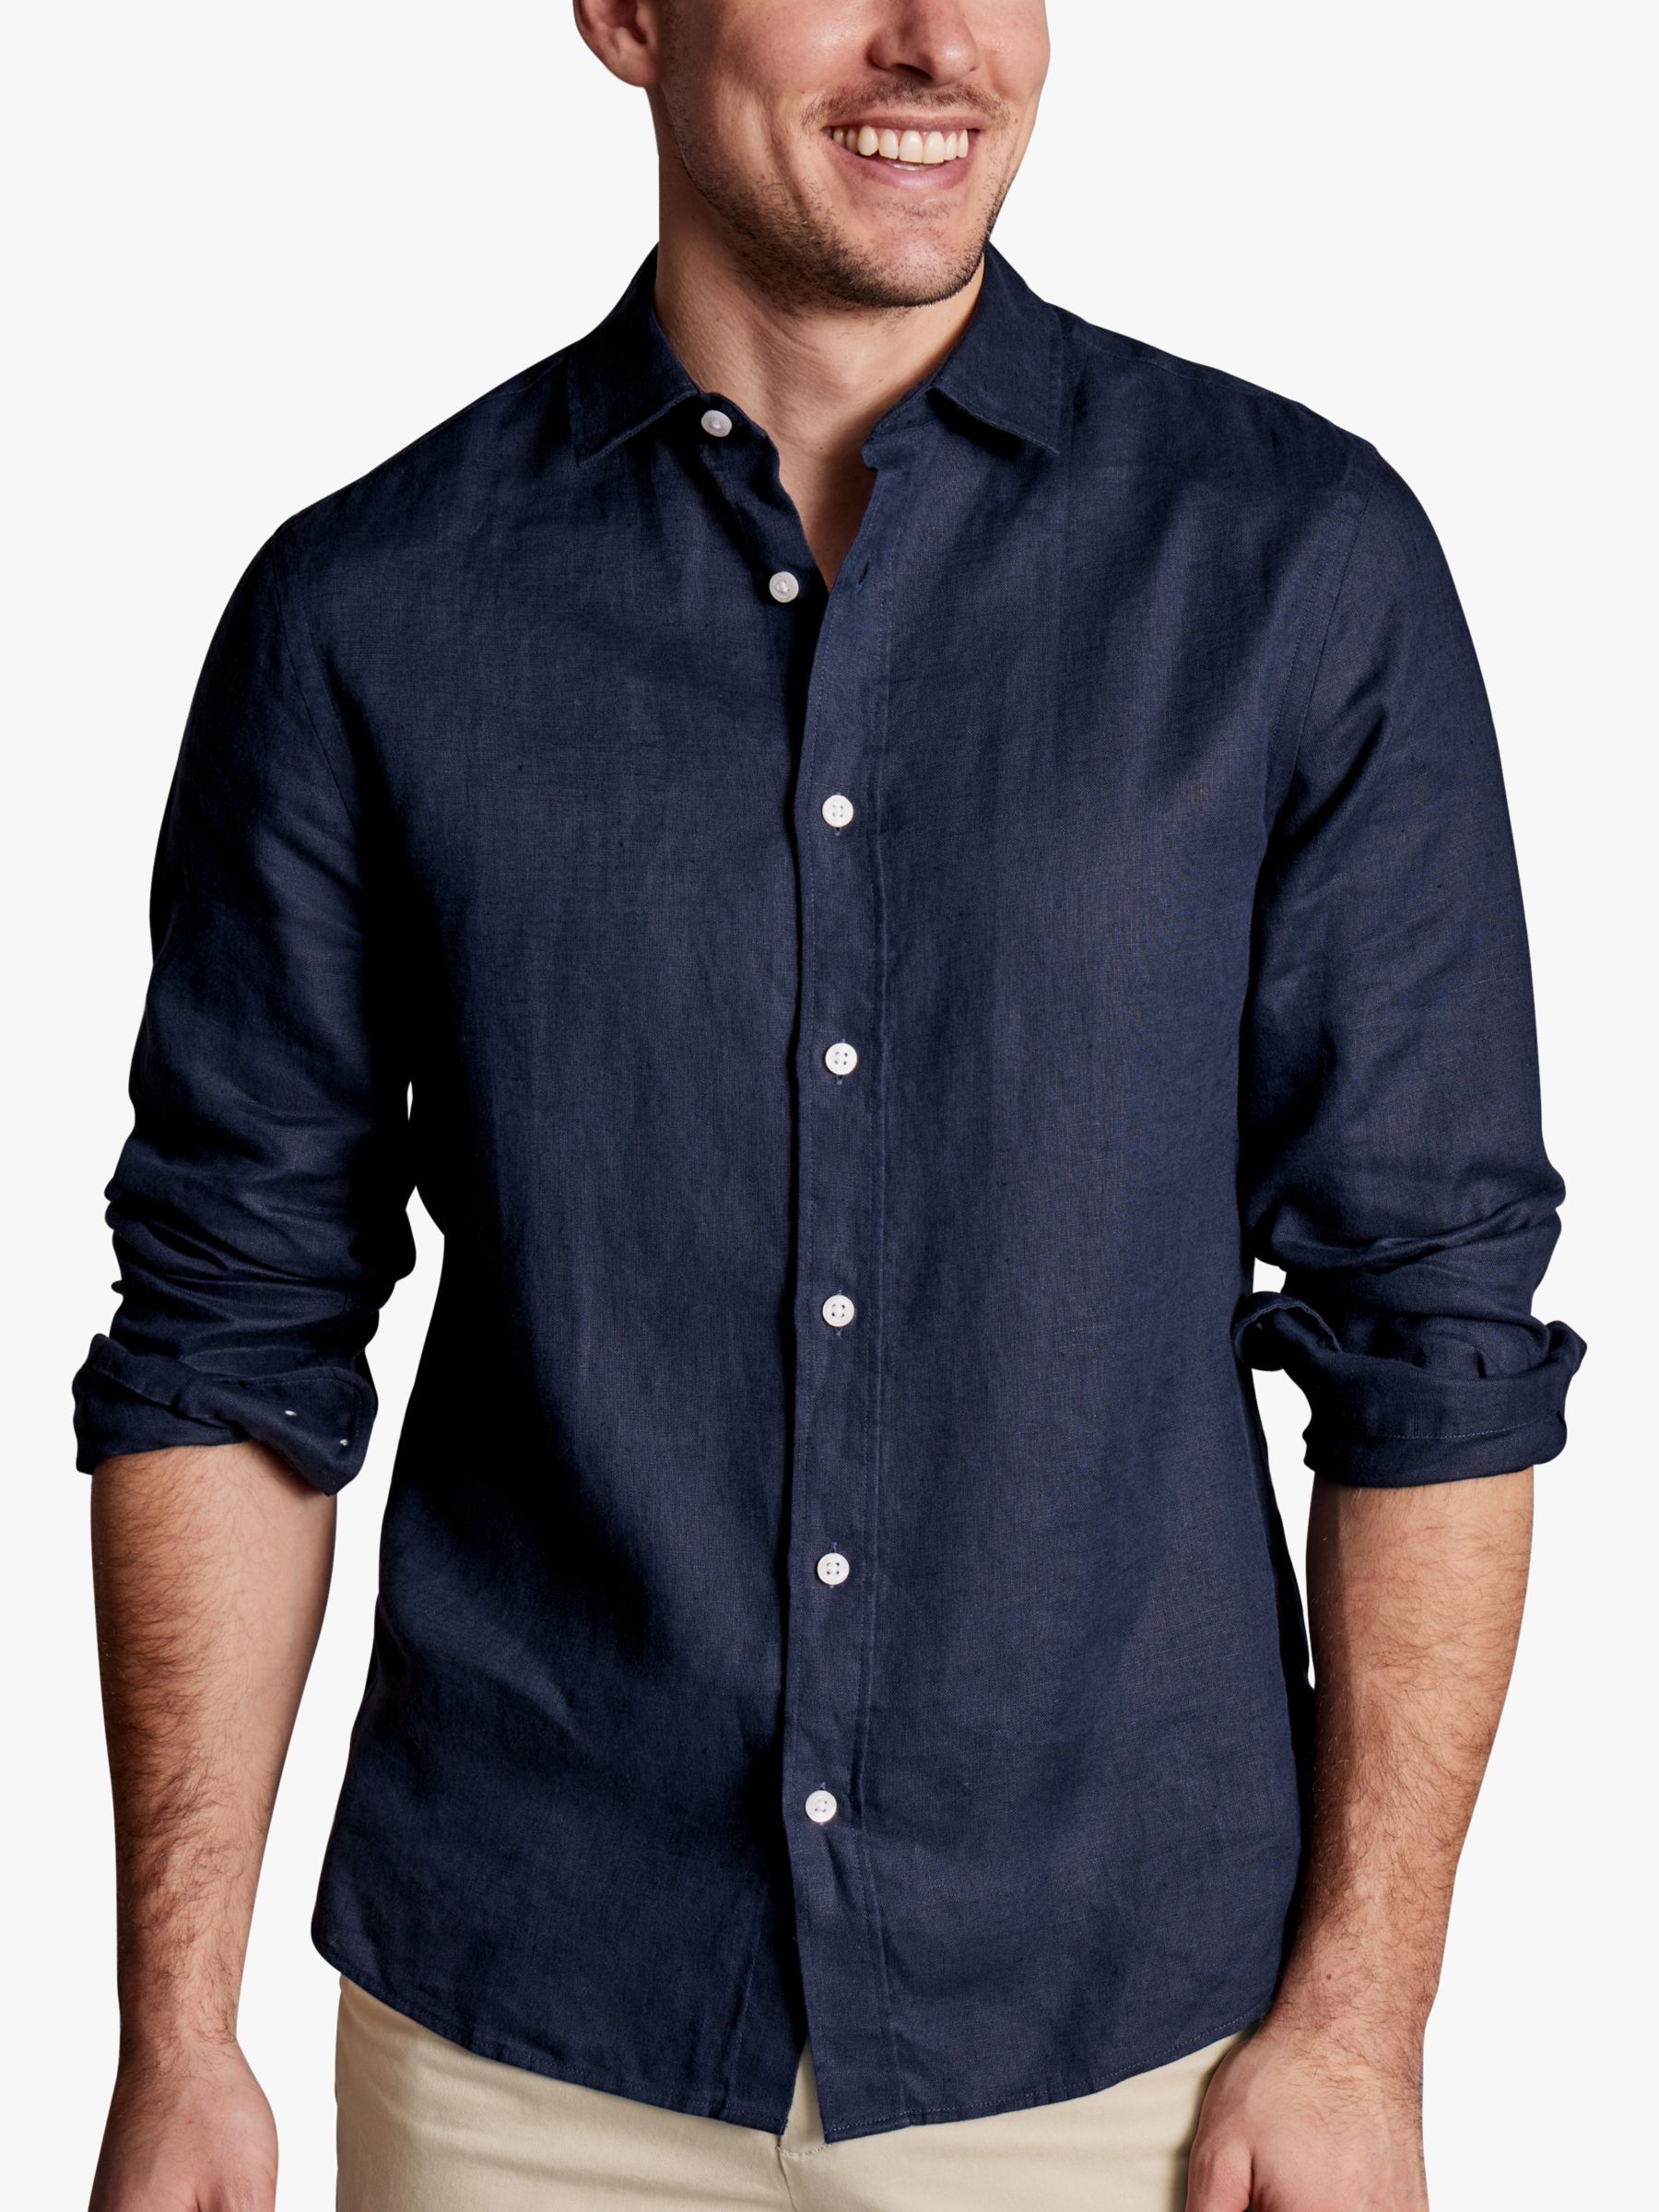 Charles Tyrwhitt Non-Iron Twill Linen Slim Fit Shirt, Navy, S